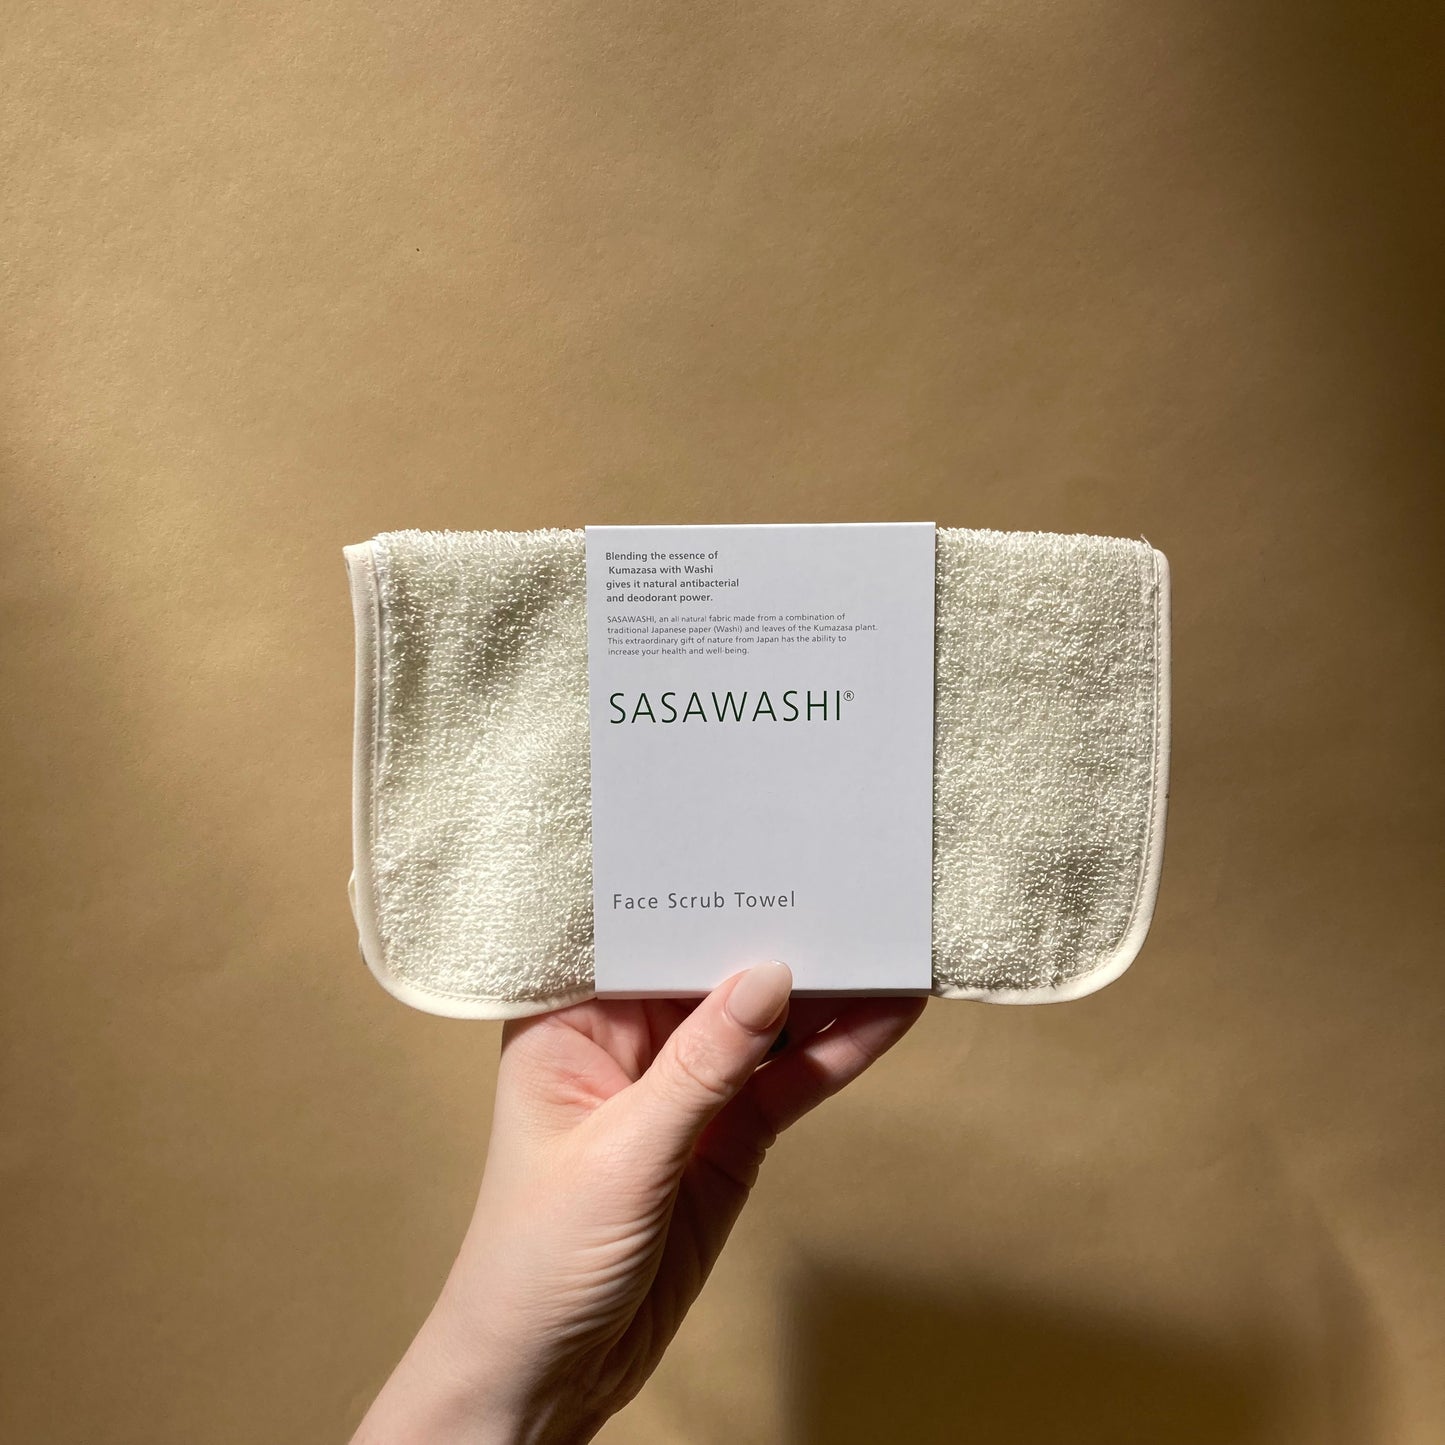 sasawashi face scrub towel